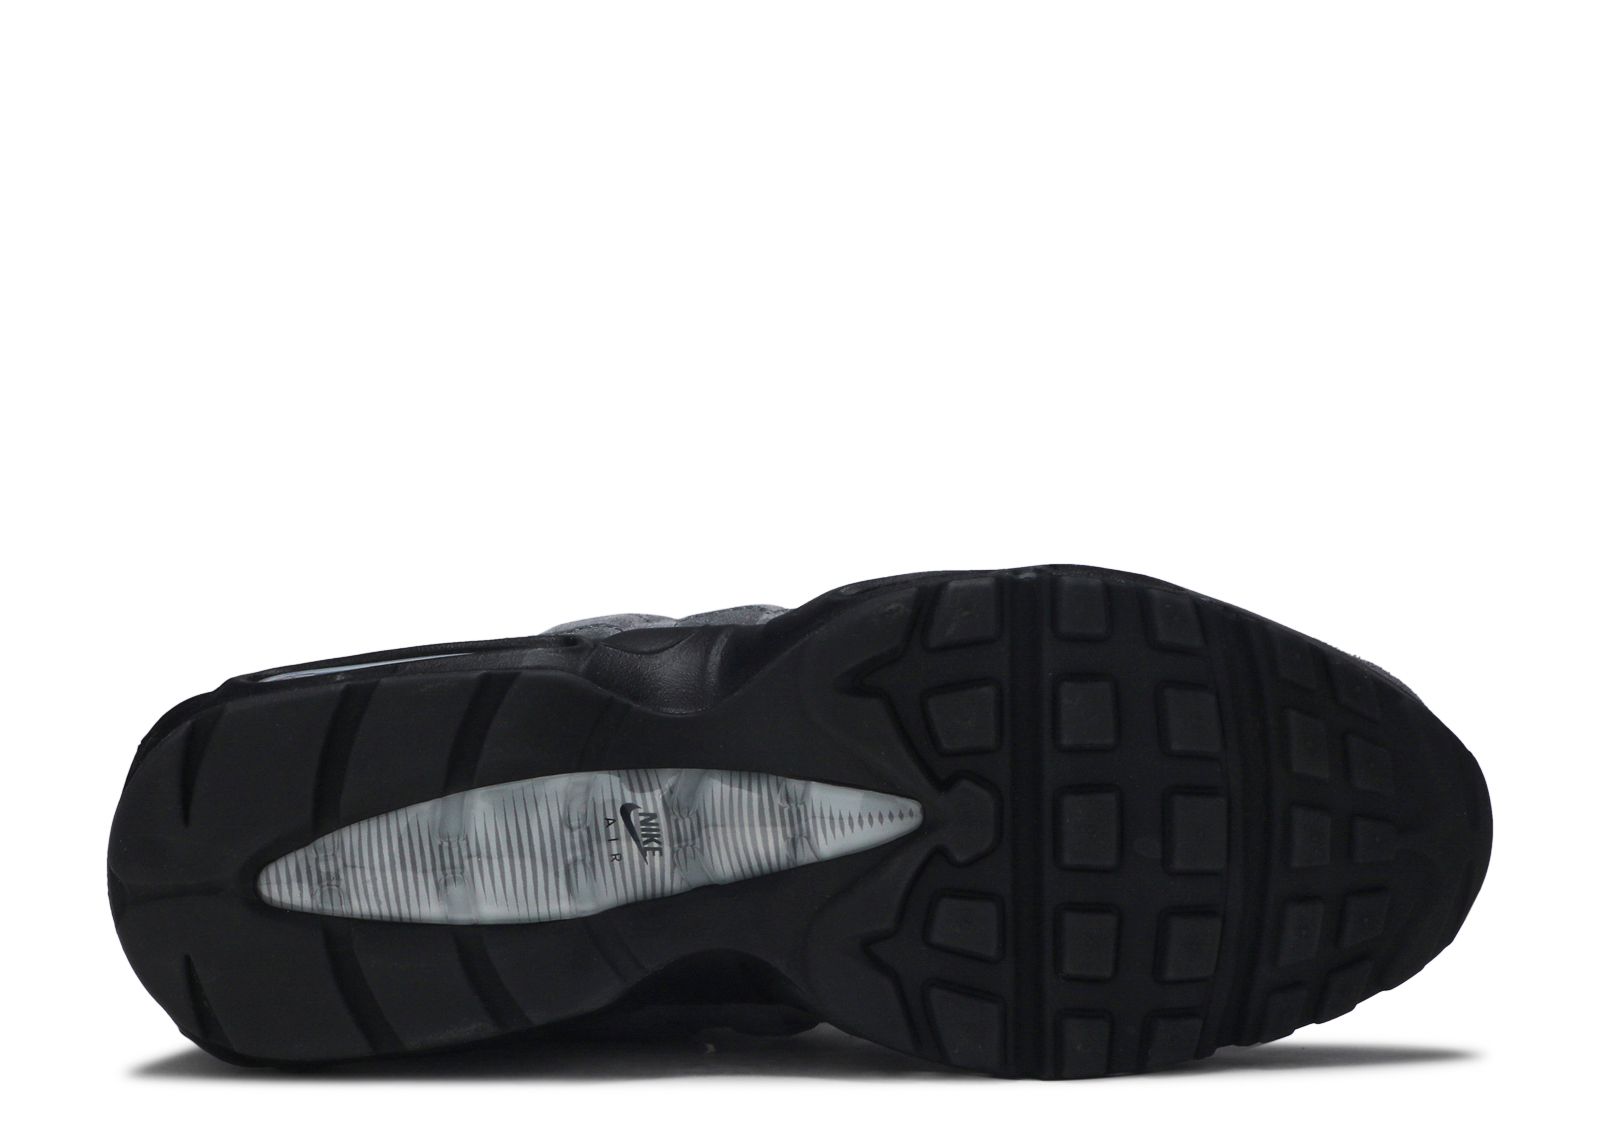 Air Max 95 'Anthracite' - Nike - AT9865 008 - anthracite/black 